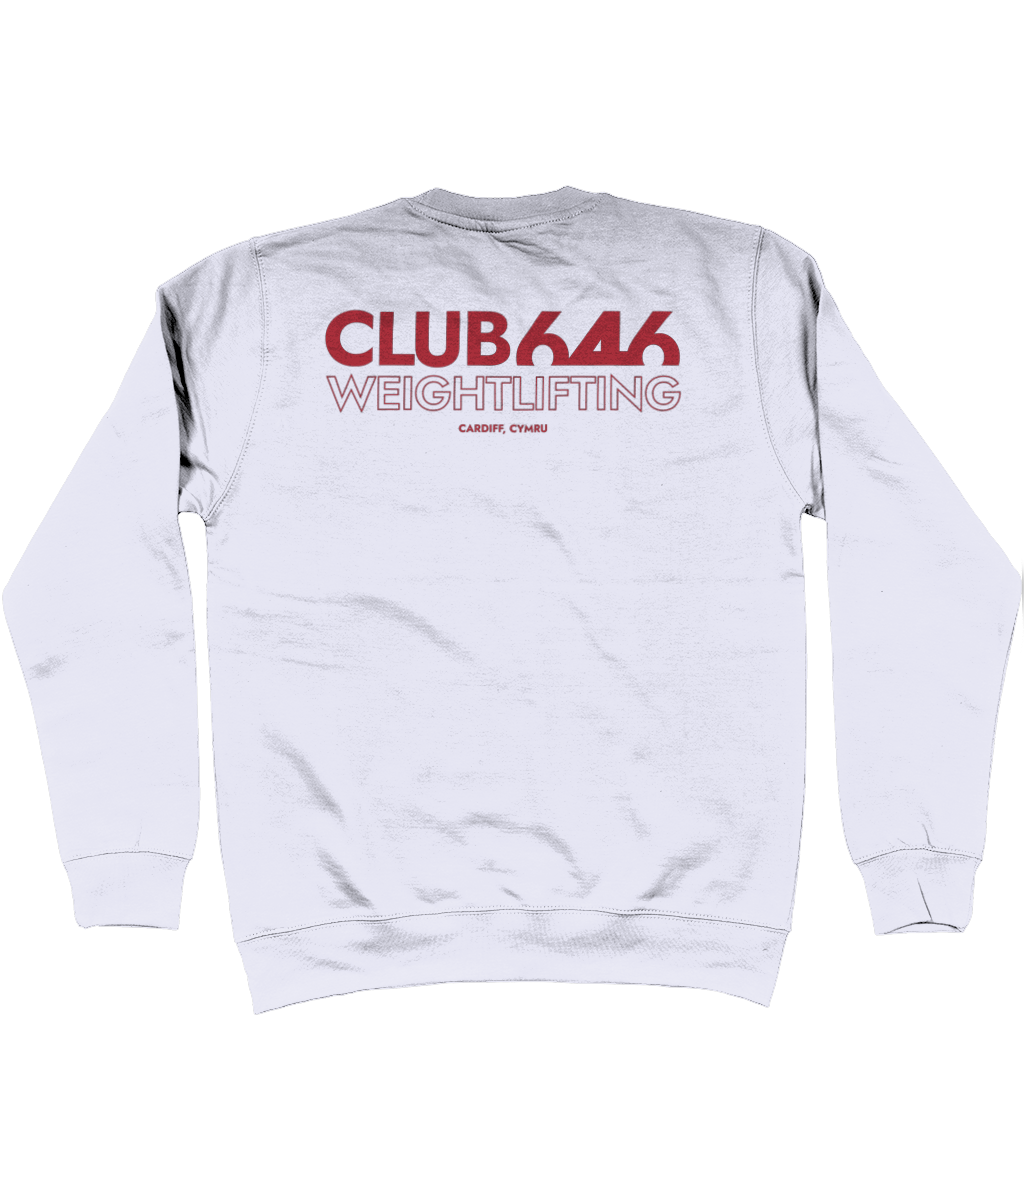 Club 646 (red) jumper